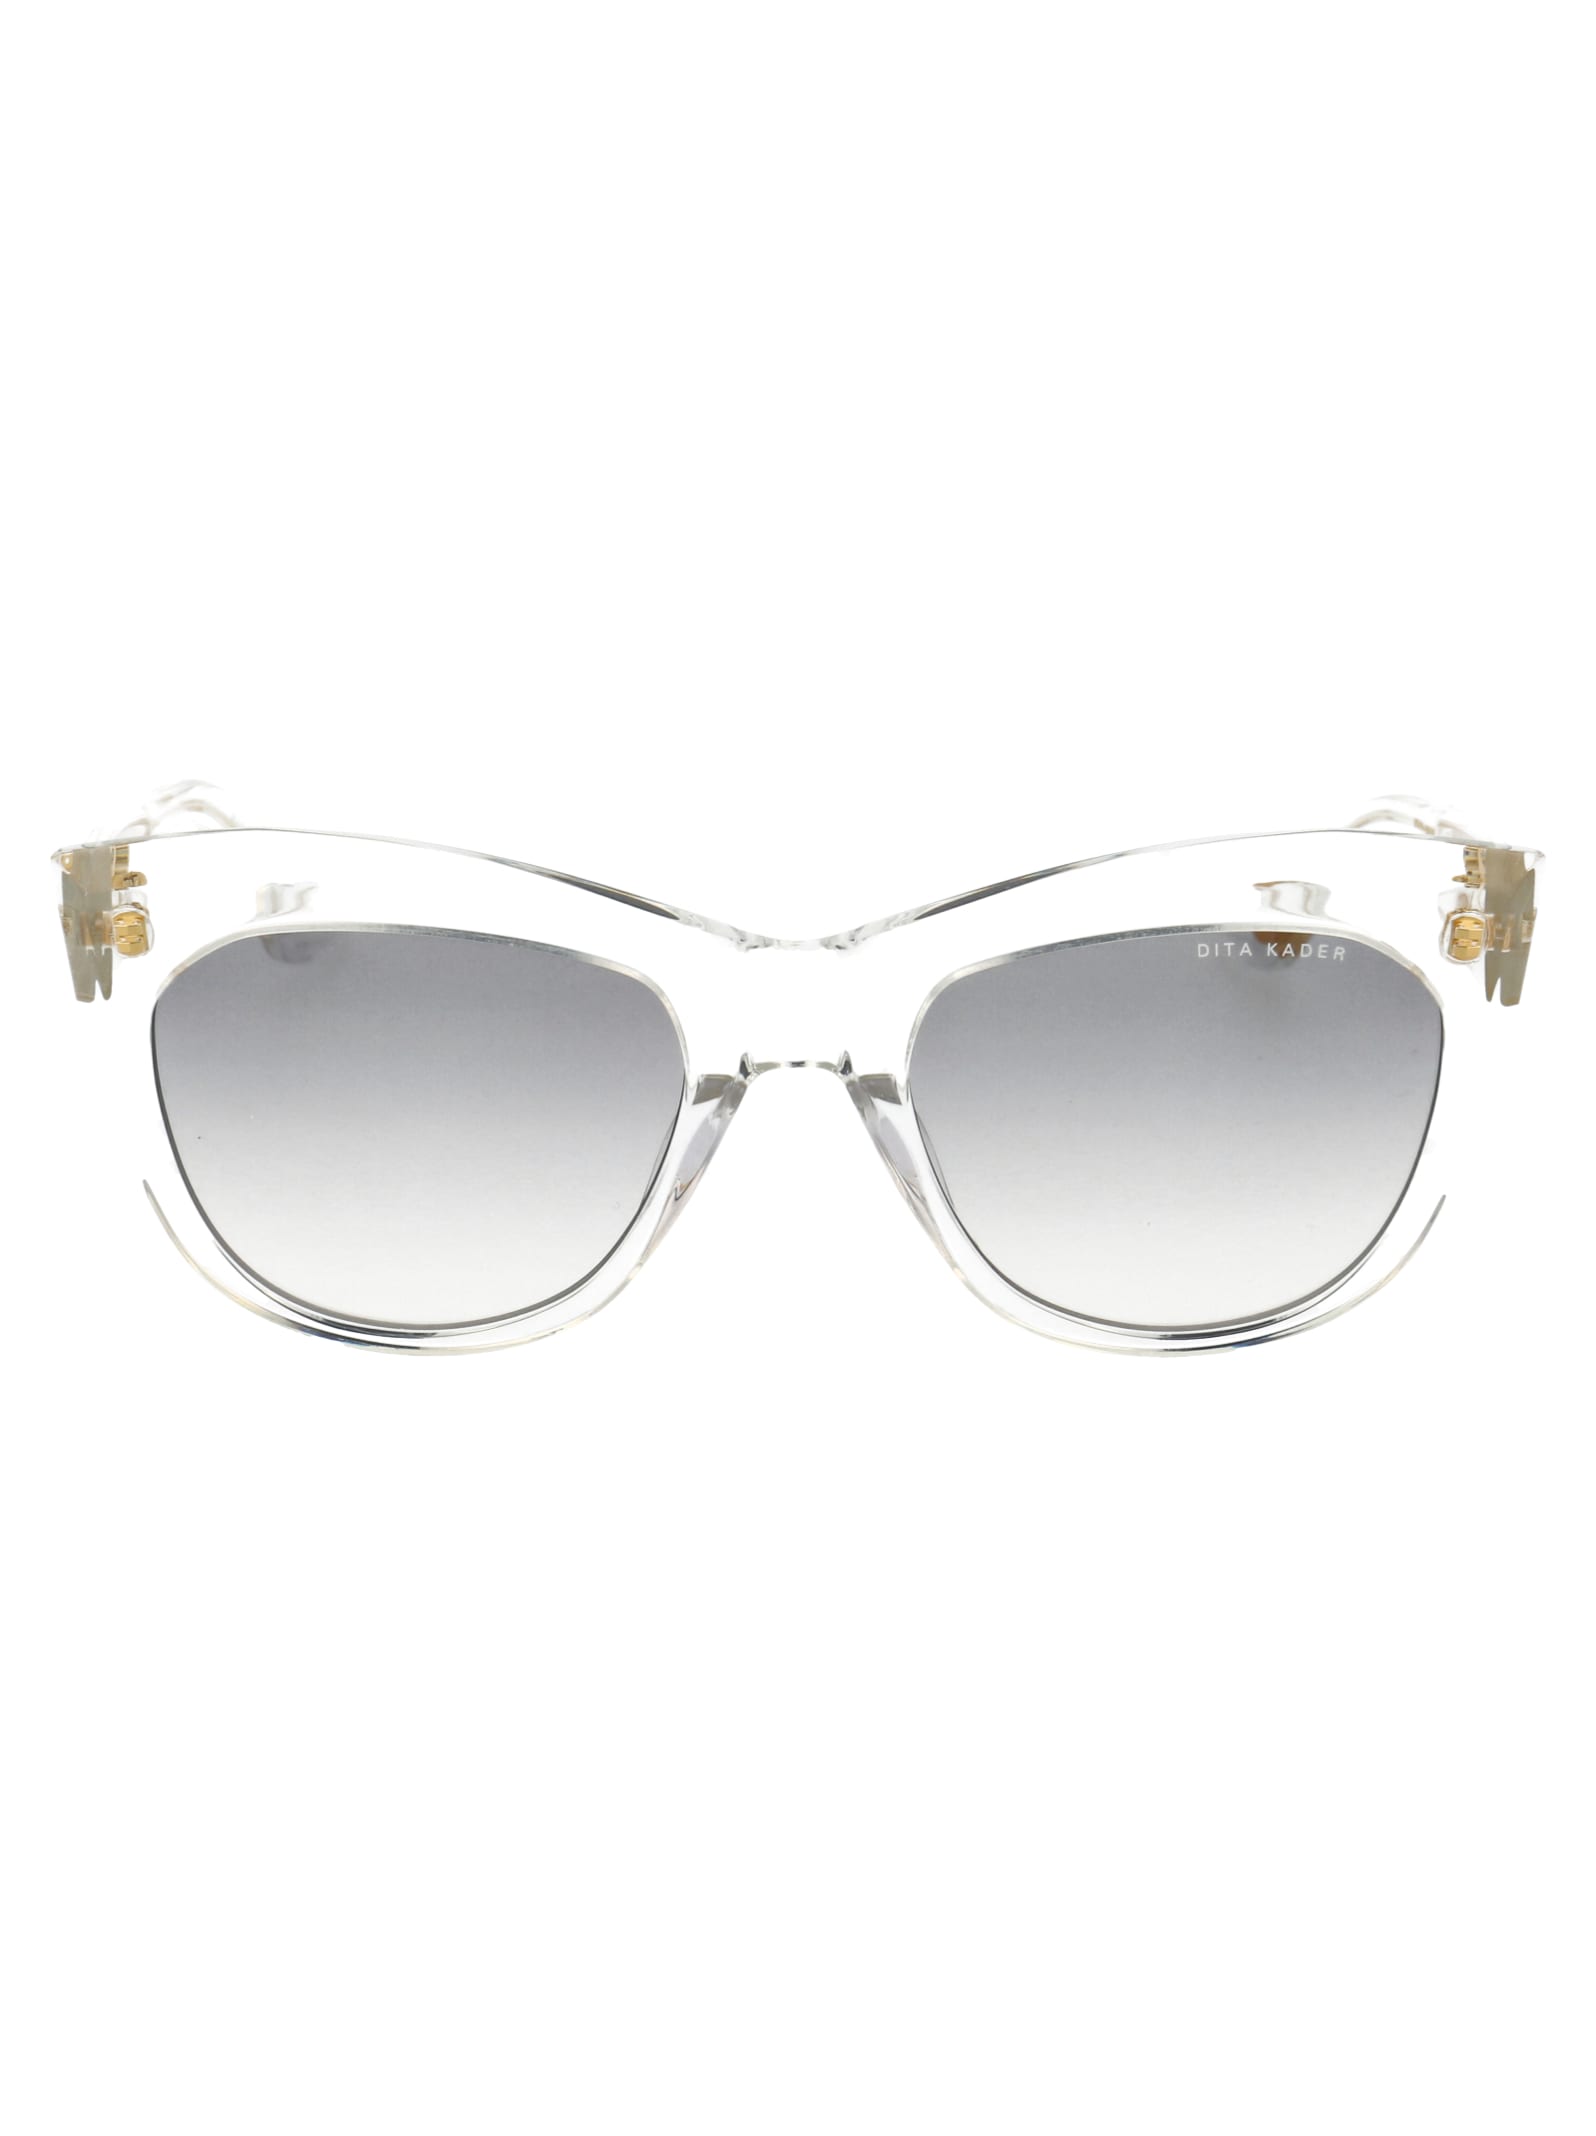 Dita Kader Sunglasses In Crystal W/light Grey To Light Brown